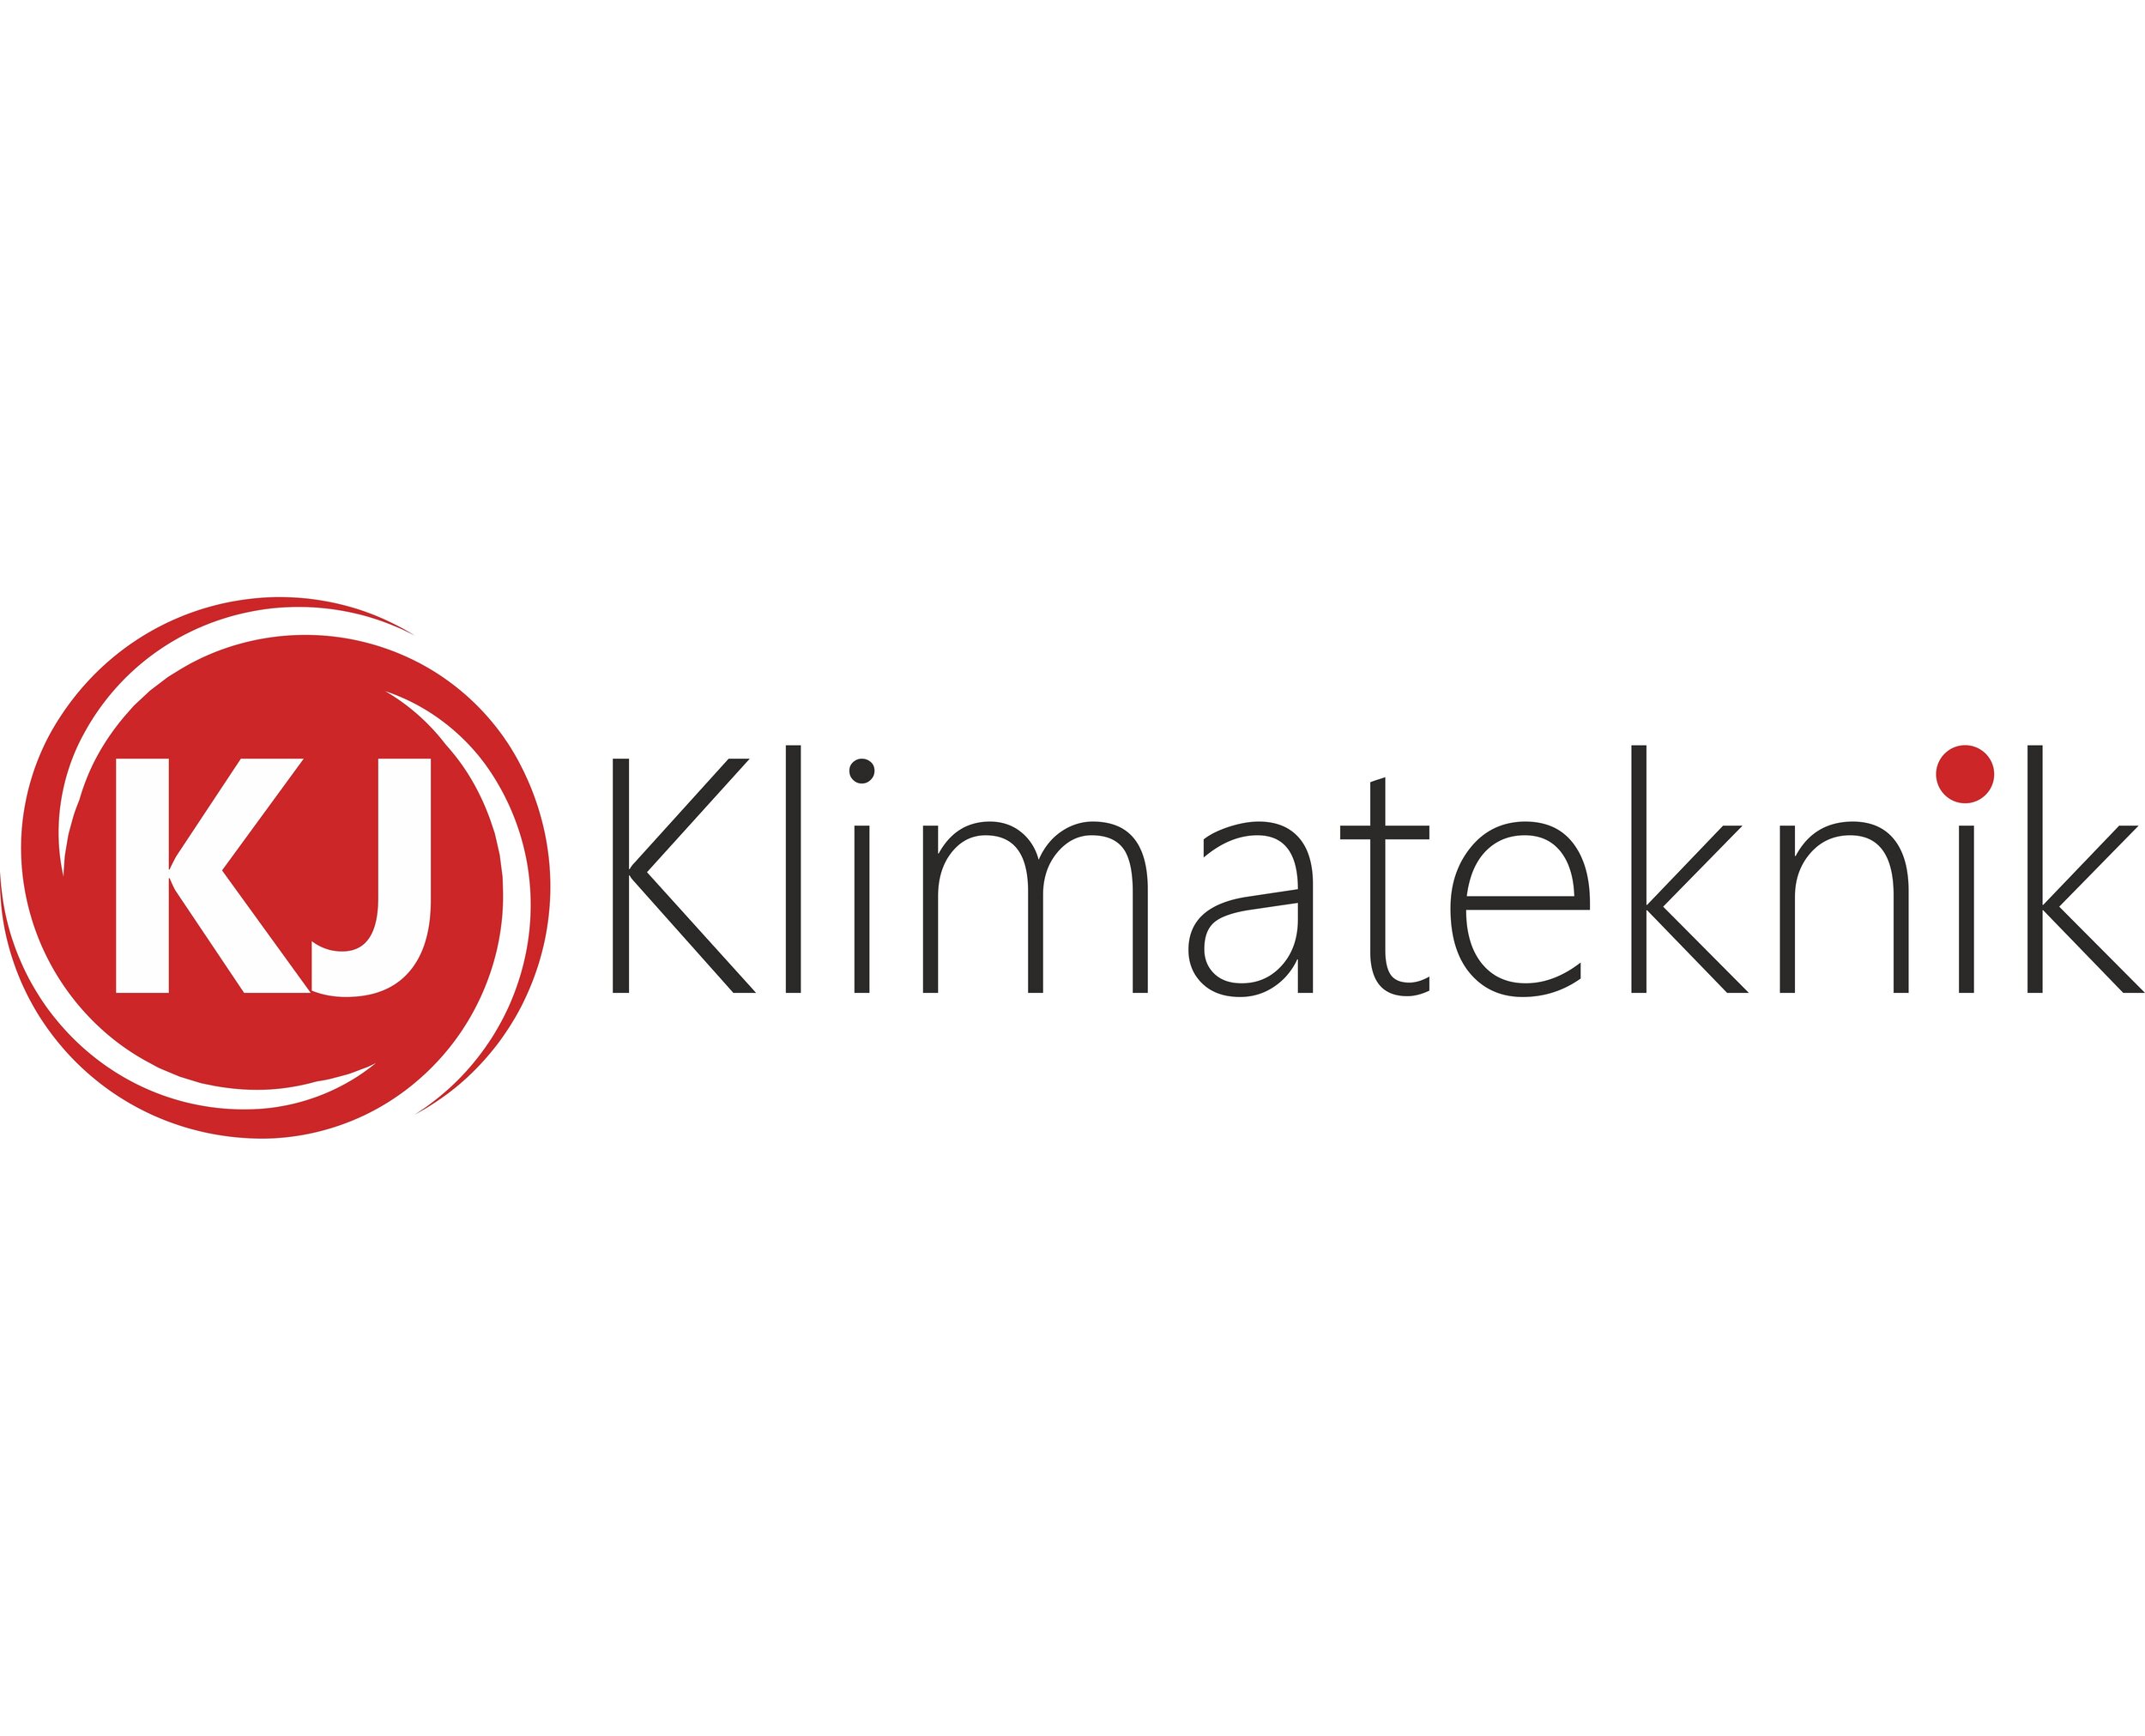 KJ_Klimateknik_logo_høj2.cdr.jpg